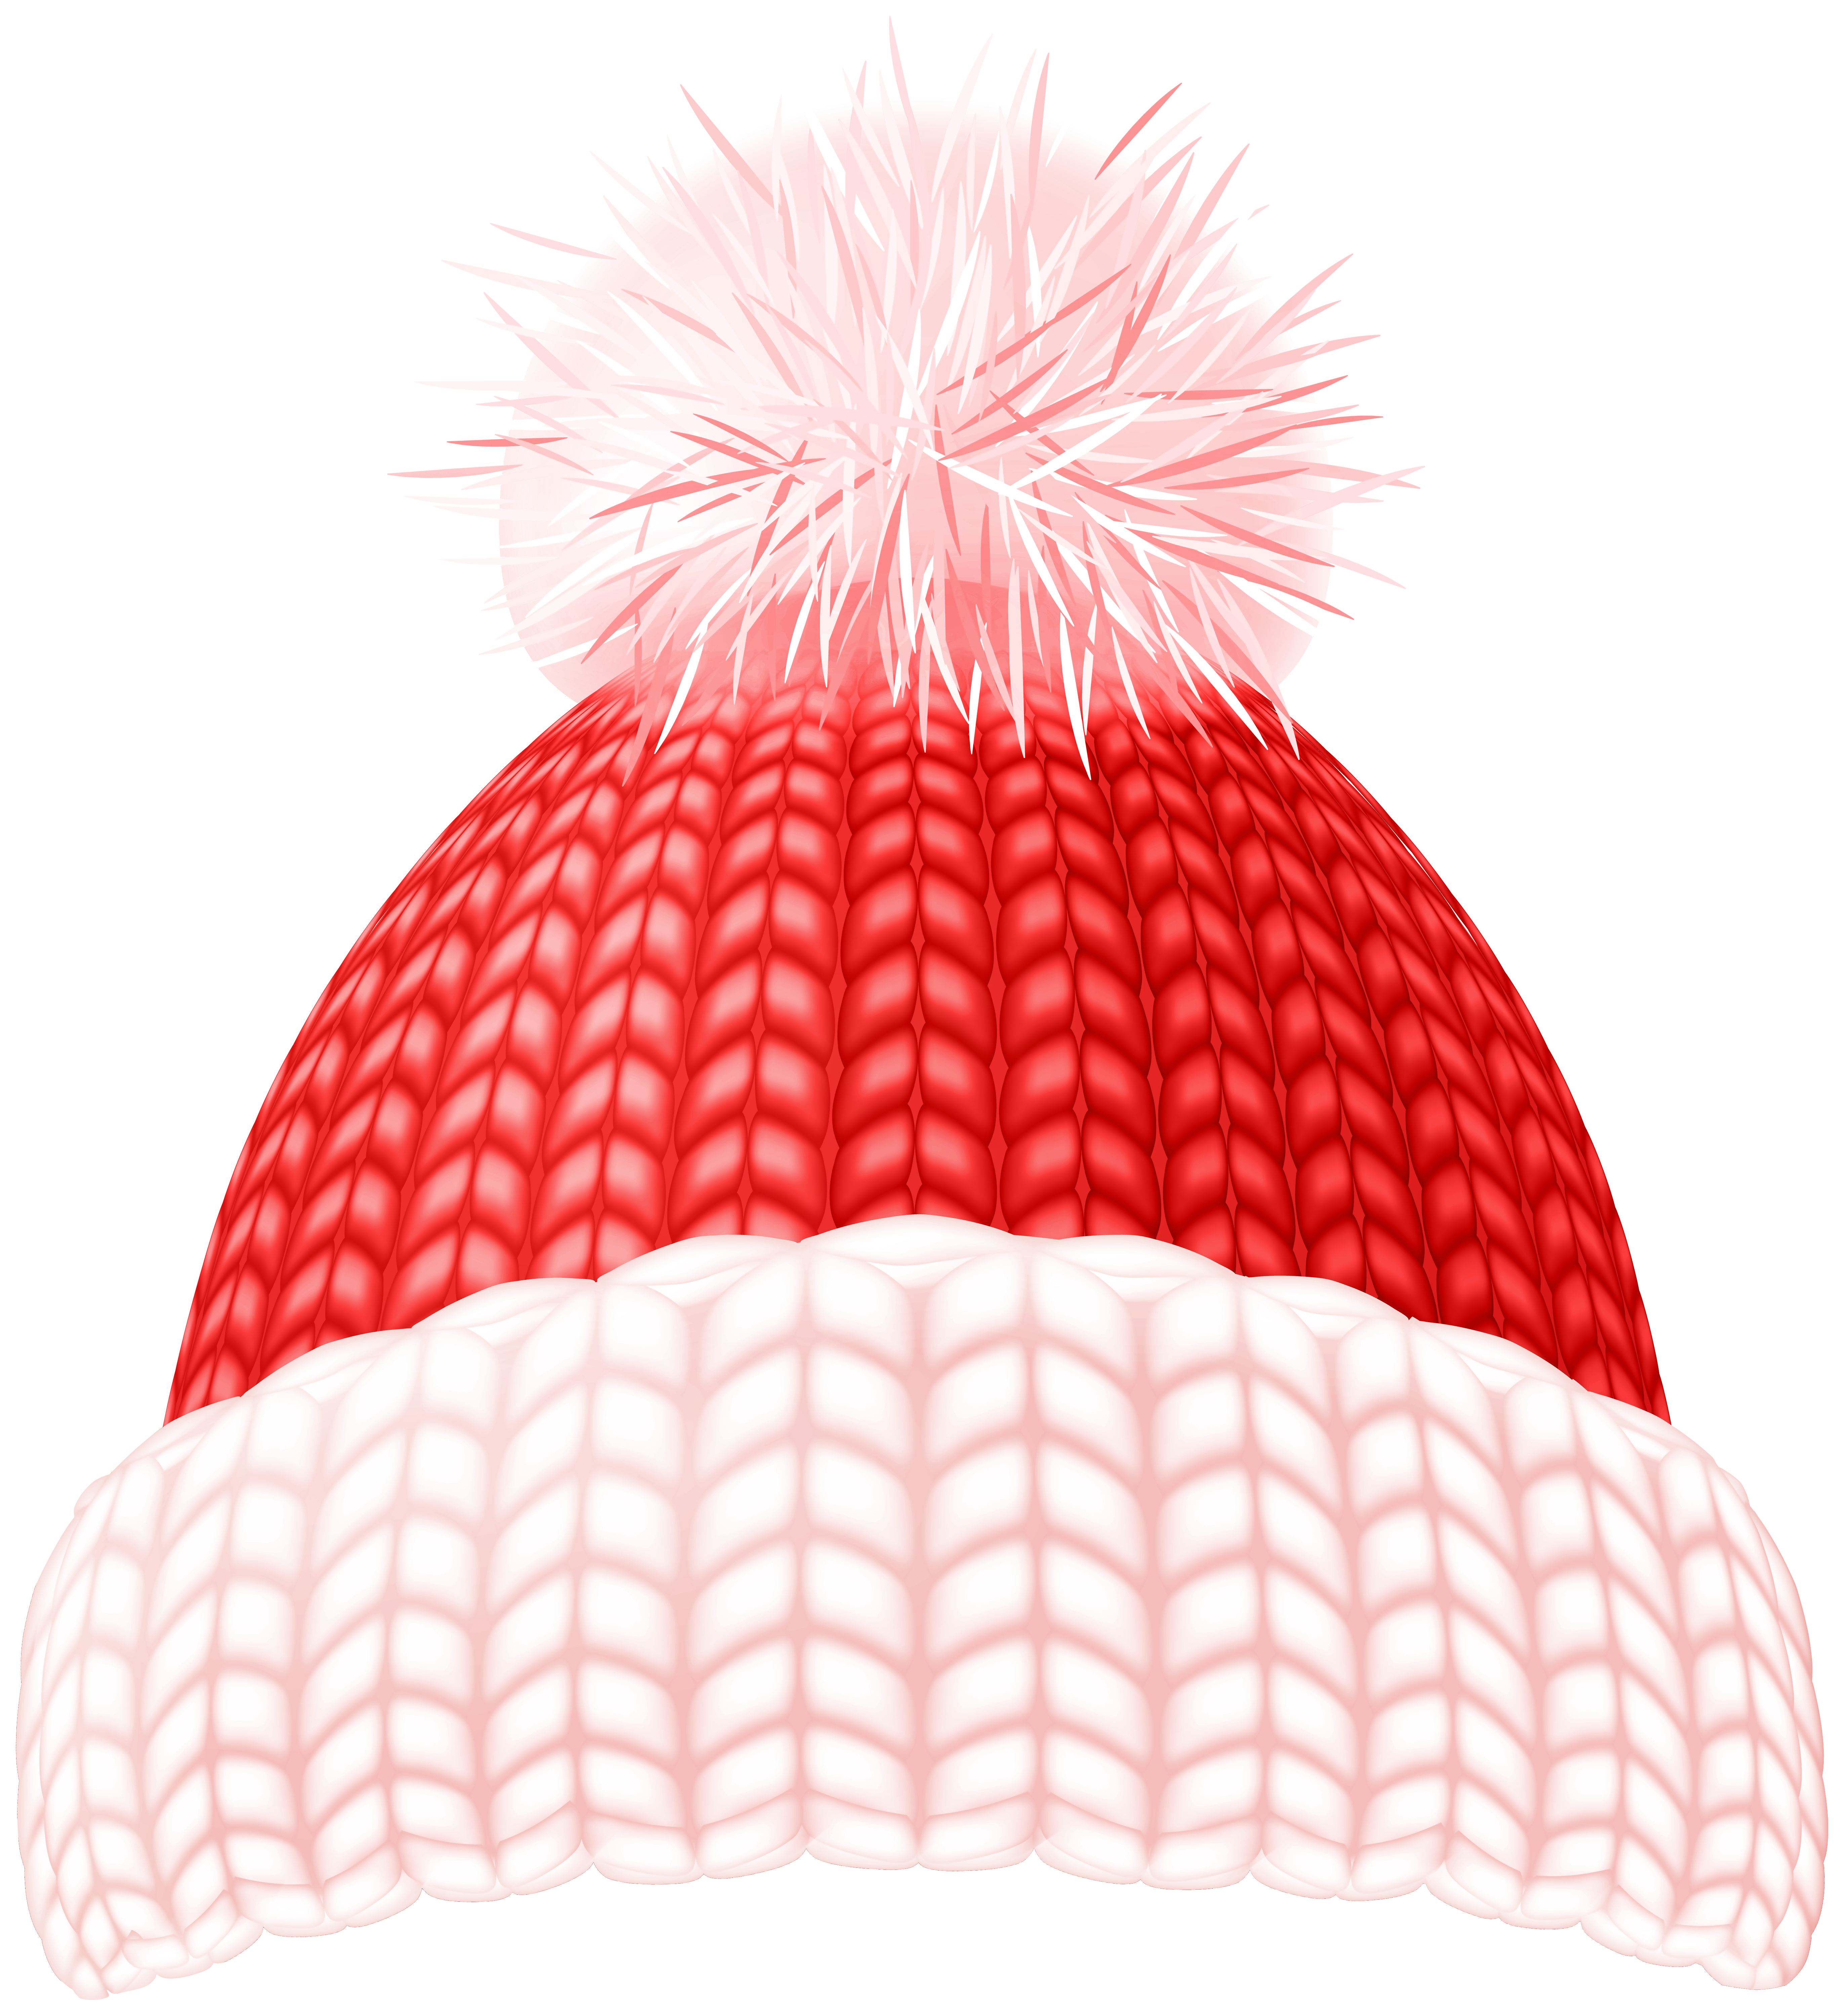 Red winter hat.